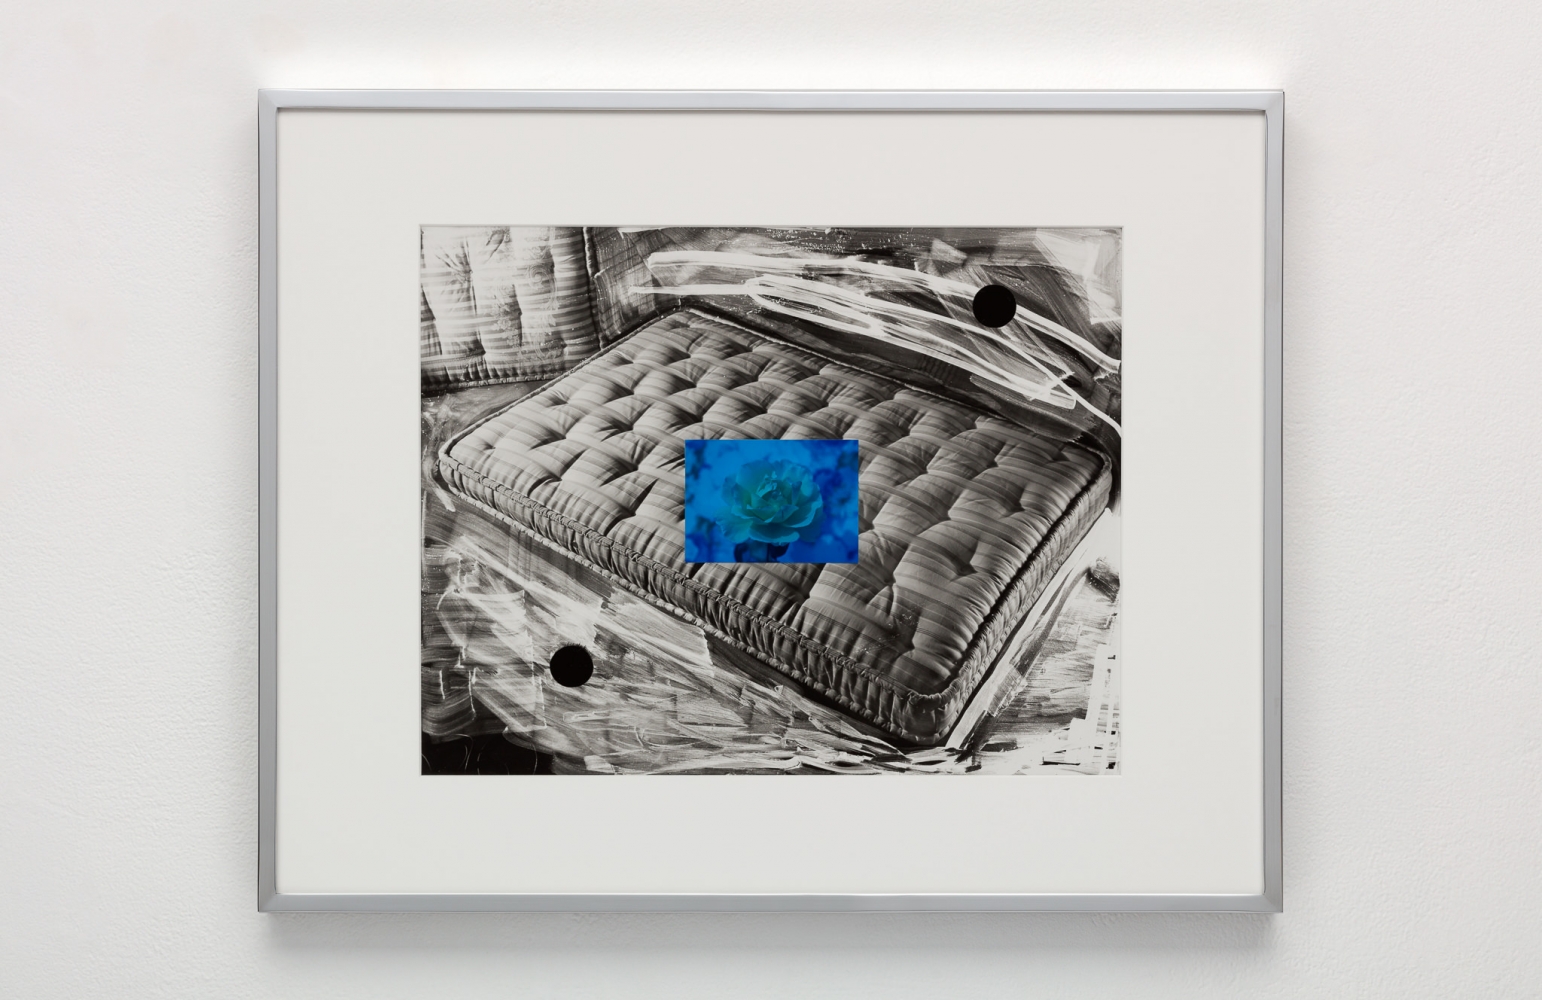 Elad Lassry

Untitled (Mattress, Rose)

2019

Silver gelatin print, C-print, aluminum frame

16 3/8 x 20 3/8 inches (41.6 x 51.8 cm) framed

Unique

EL 503

$22,000

&amp;nbsp;

INQUIRE